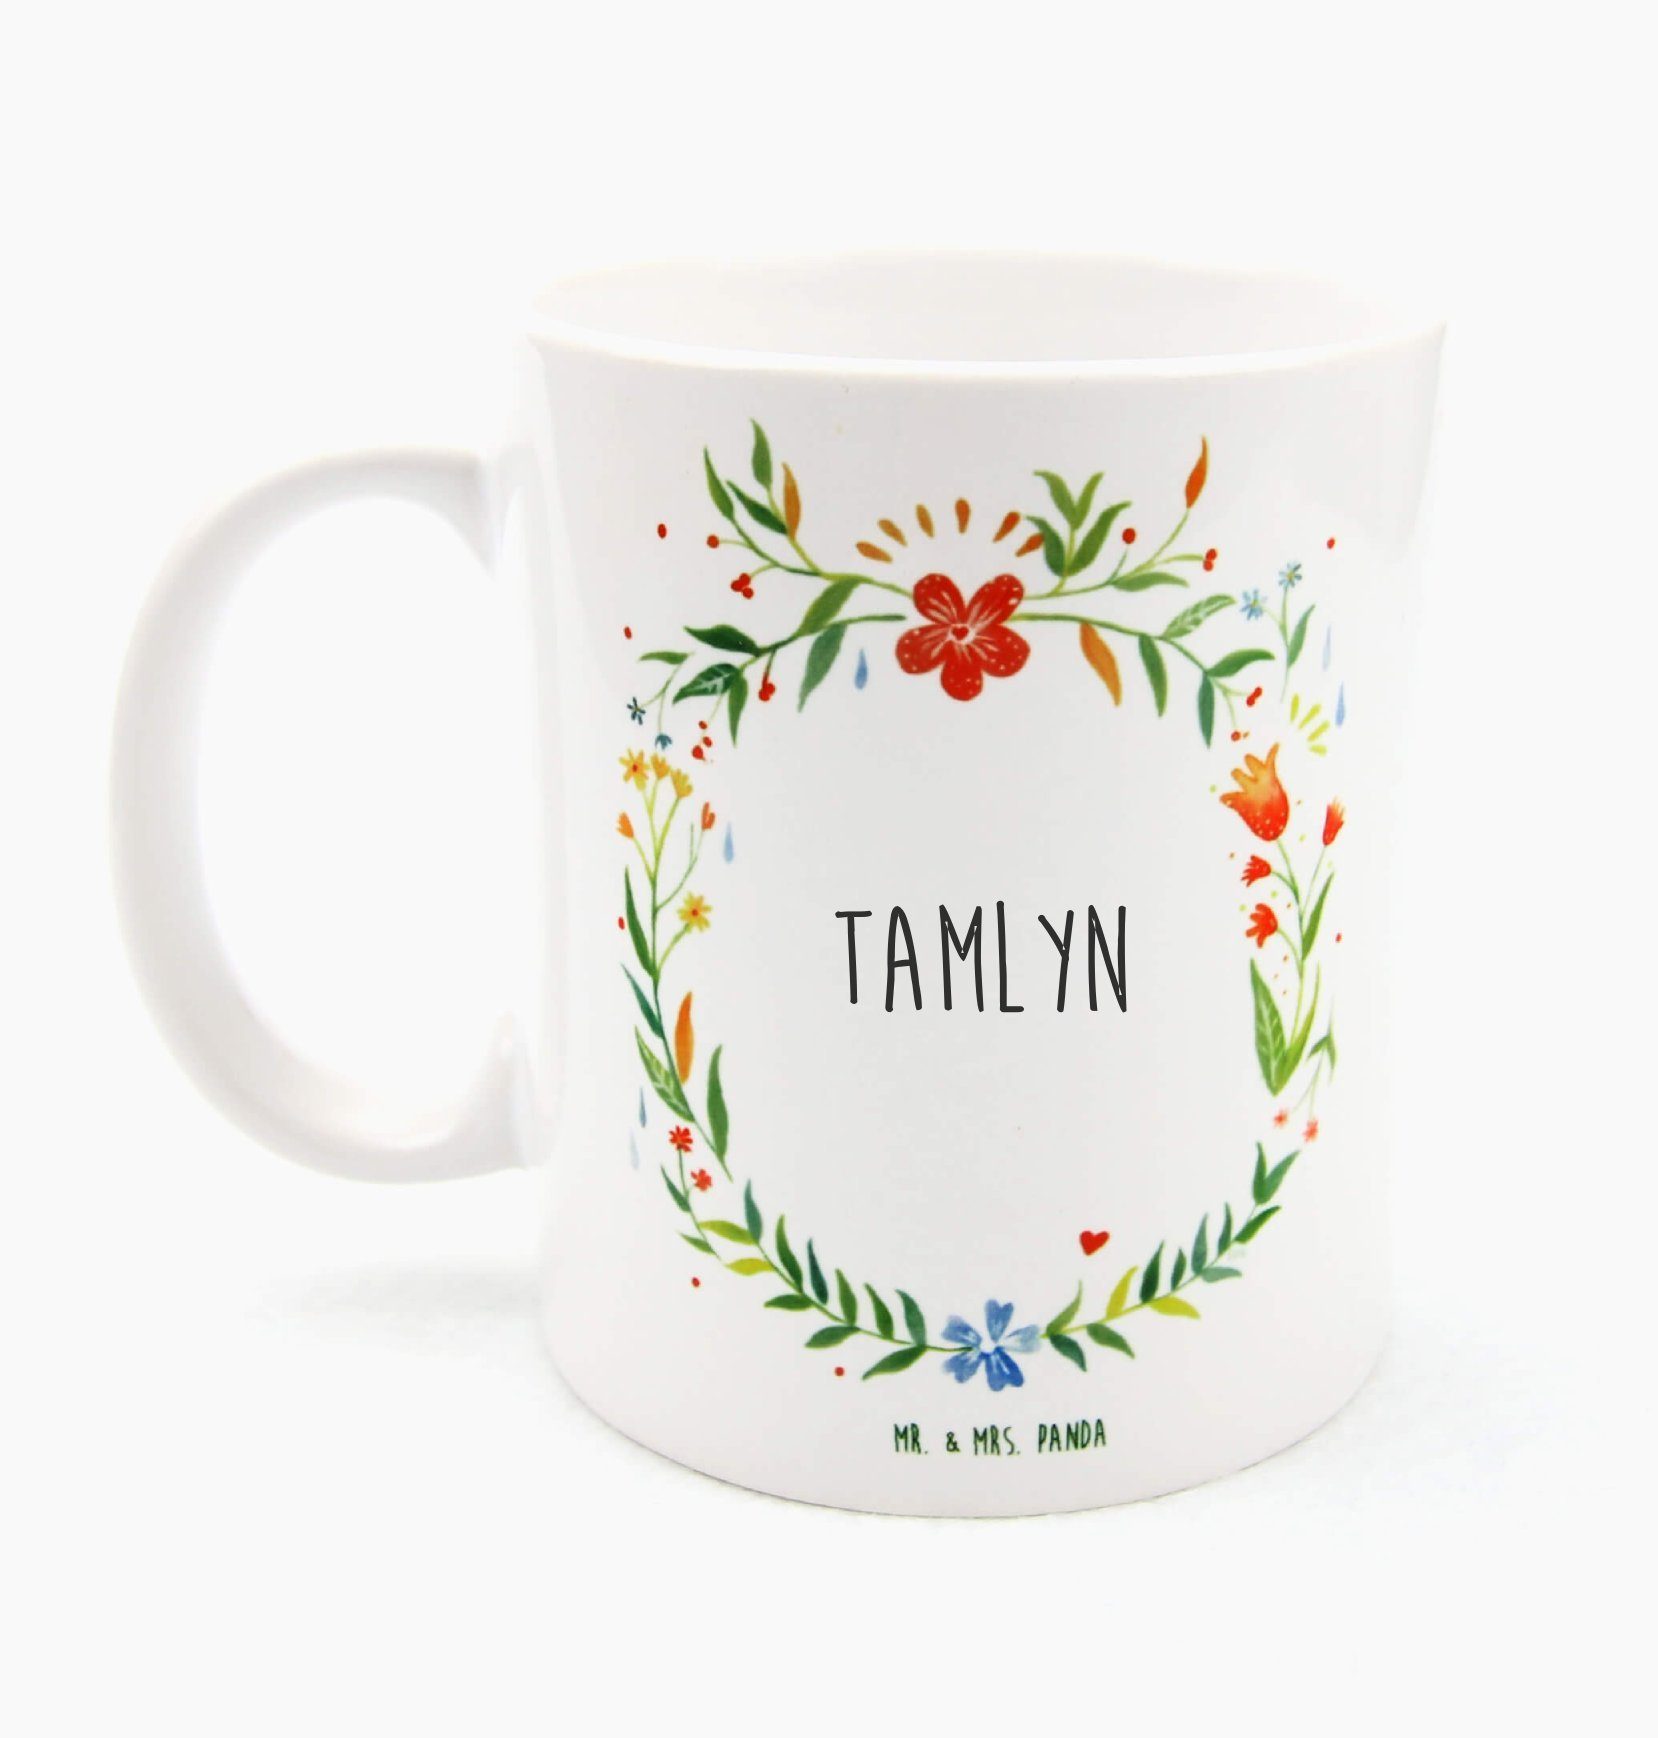 Mr. & Mrs. Panda Tasse Tamlyn - Geschenk, Geschenk Tasse, Kaffeetasse, Teetasse, Kaffeebeche, Keramik